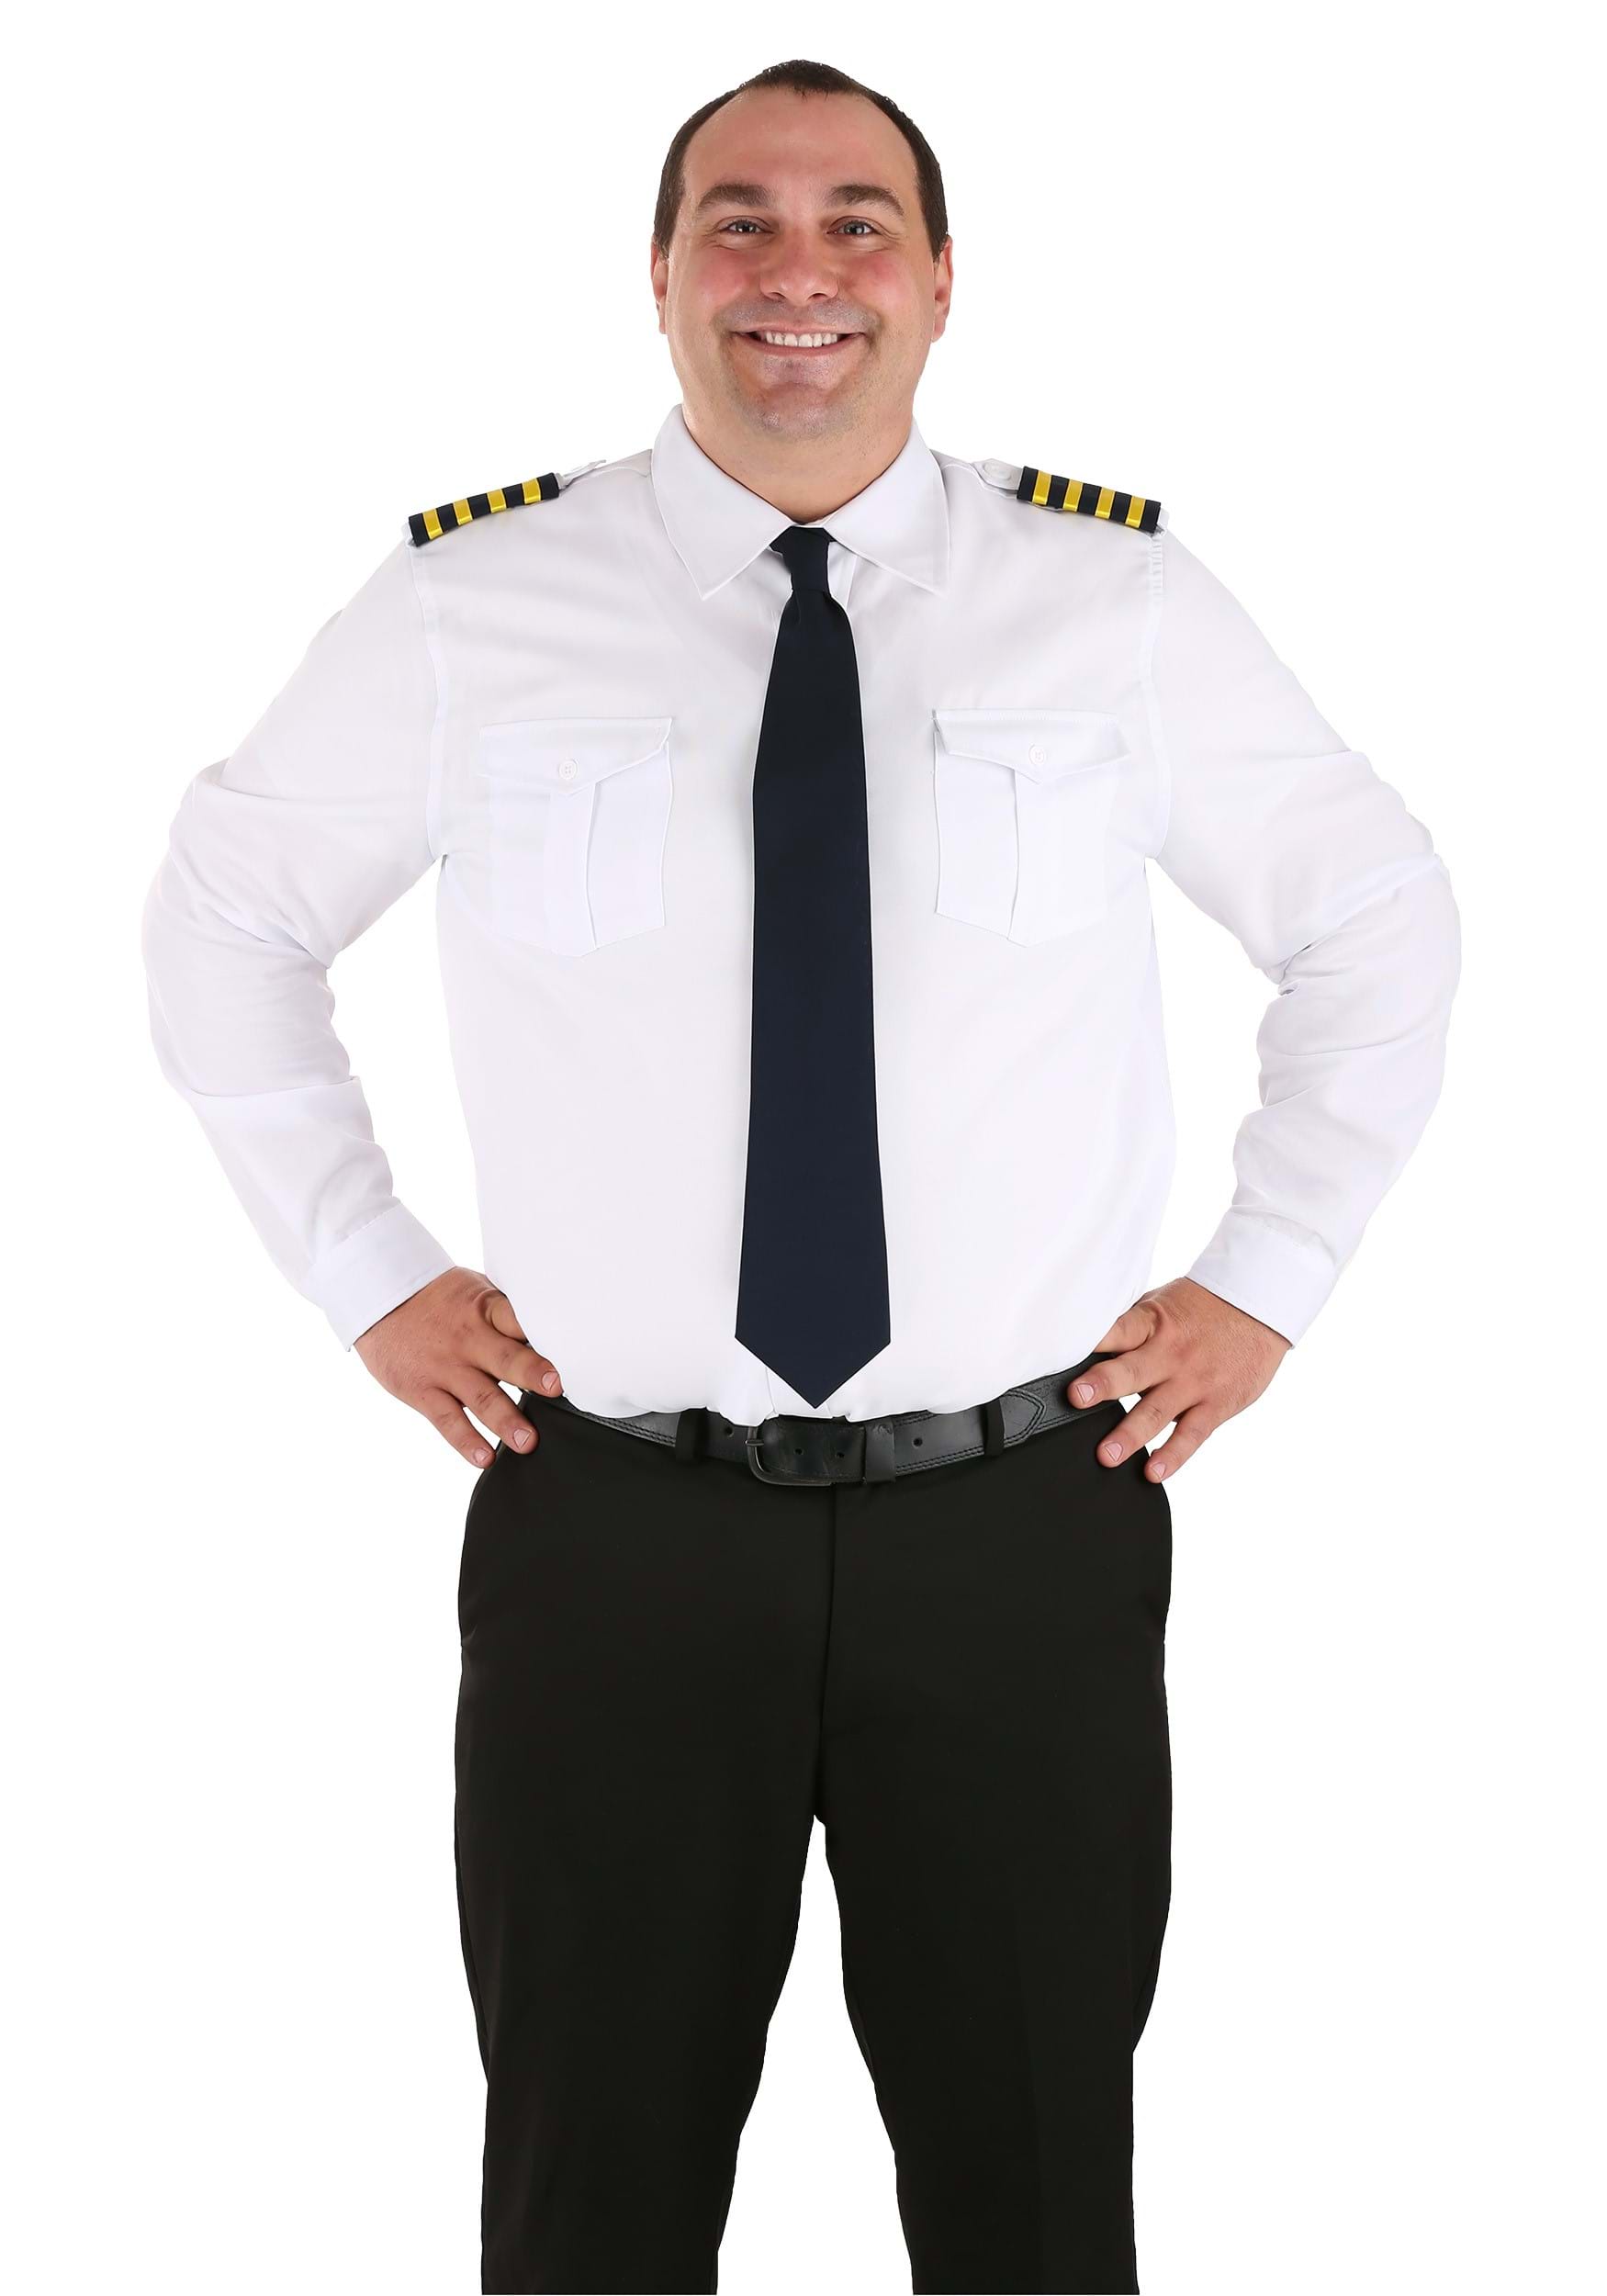 Plus Size Airline Pilot Adult Costume Shirt